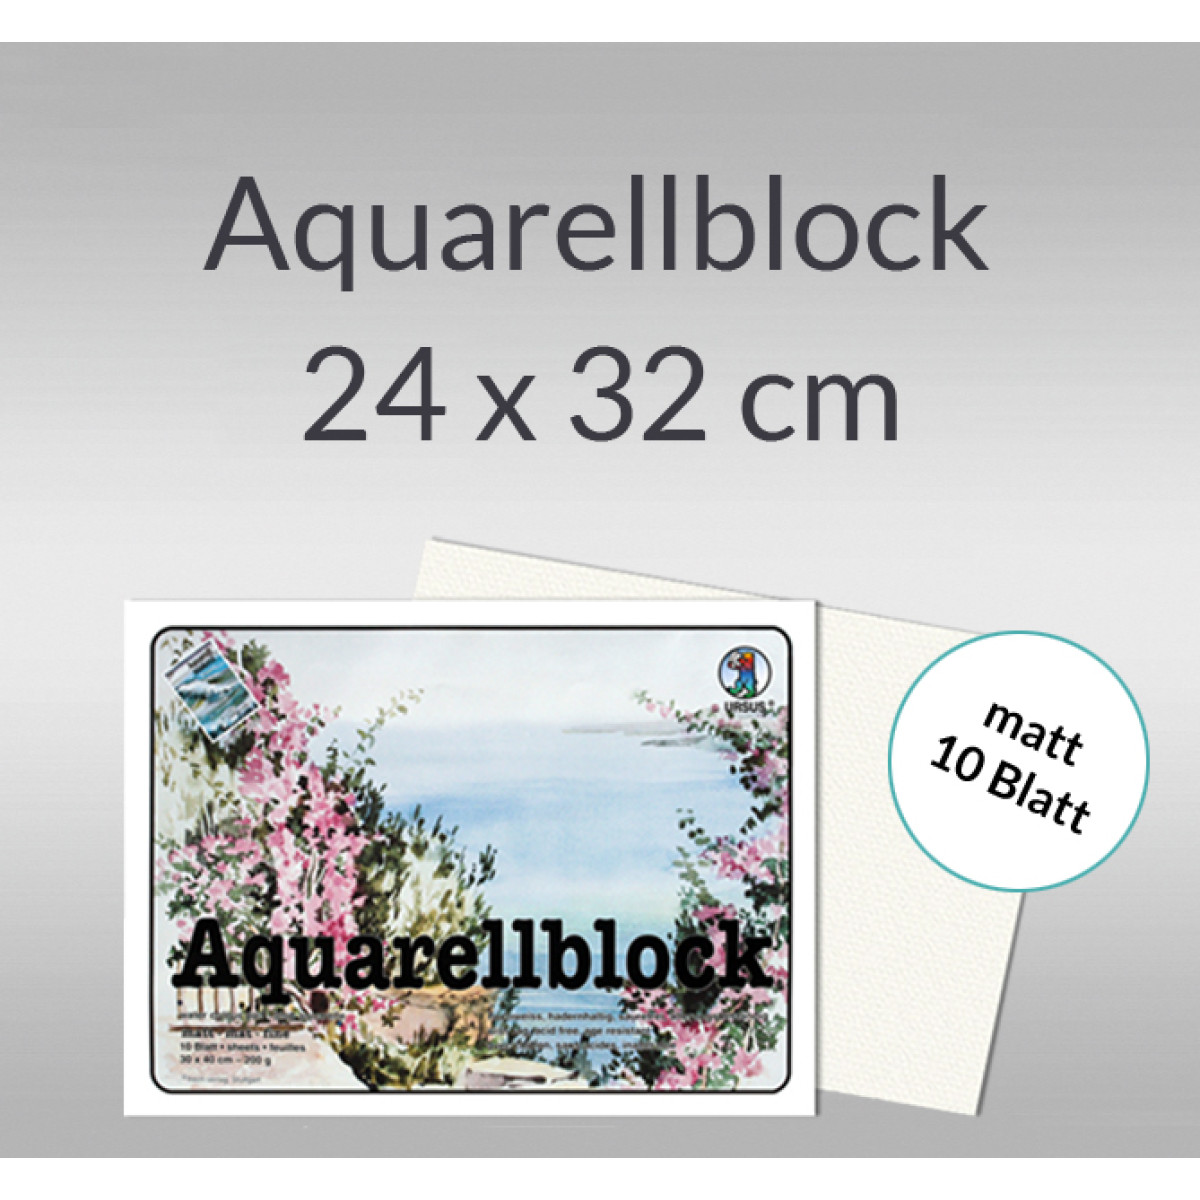 Aquarellblock matt 200 g/qm 24 x 32 cm